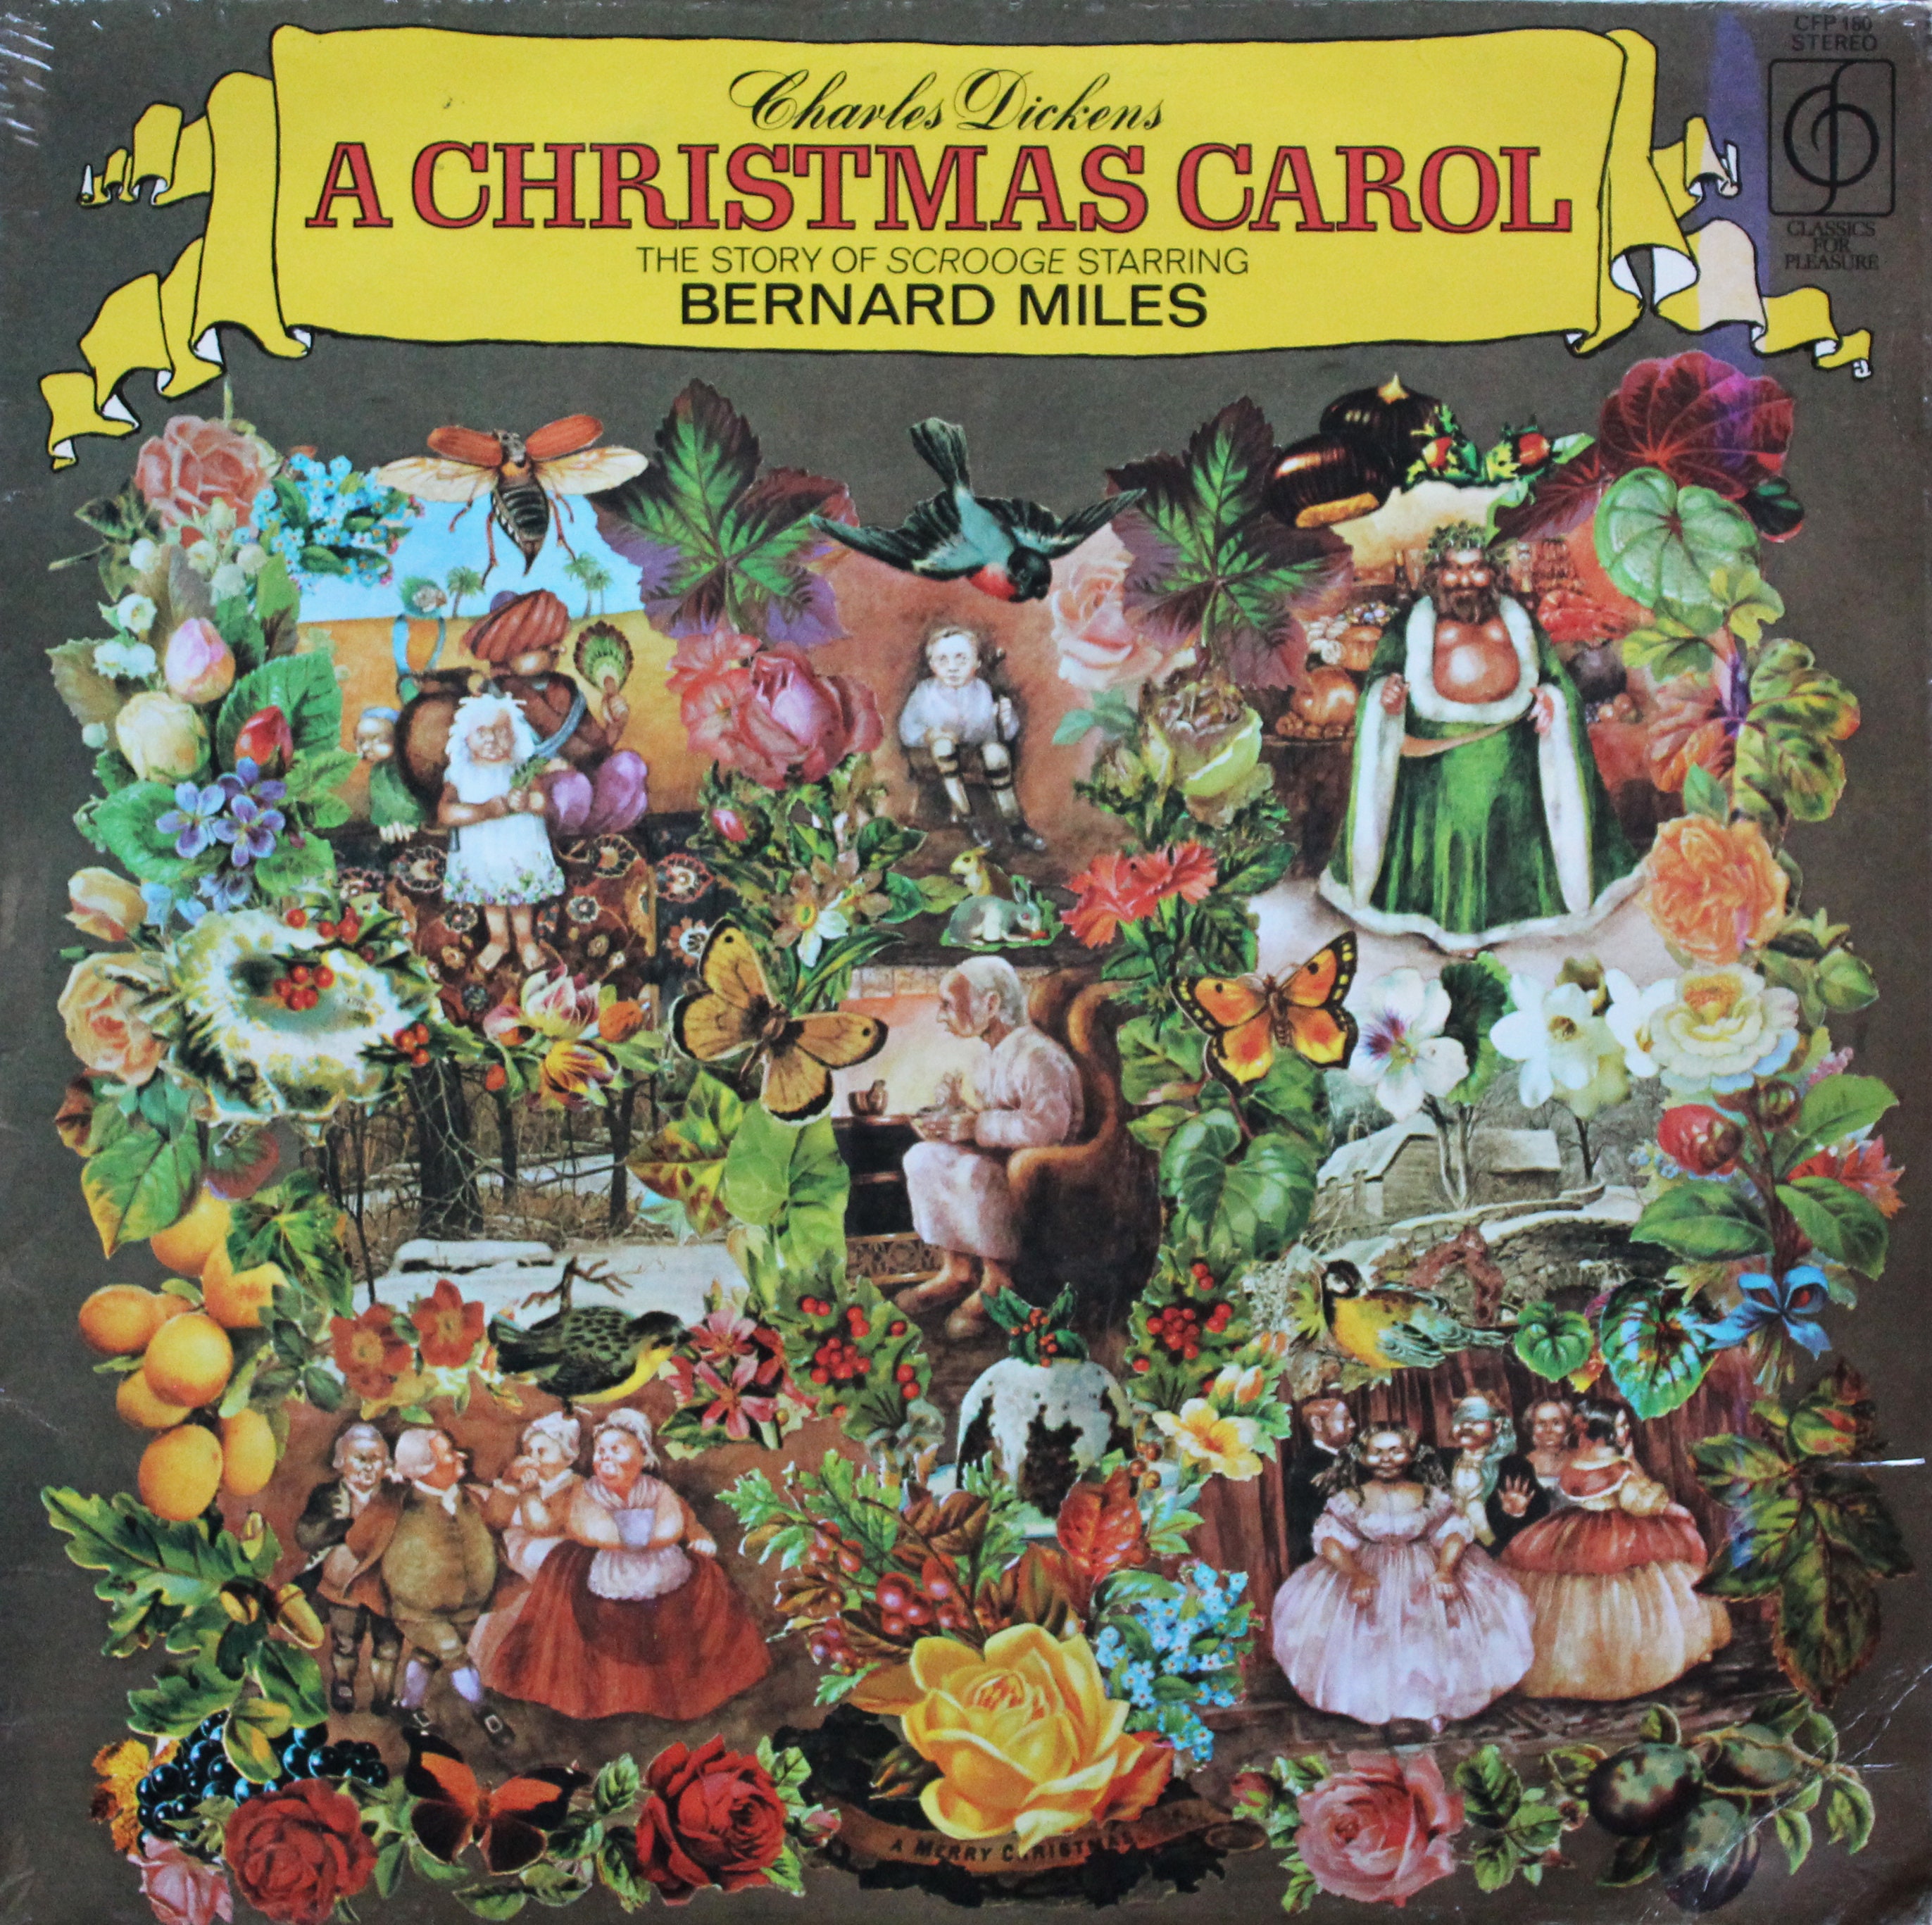 Disney's Christmas Carols Album Record LP Cover Poster Print